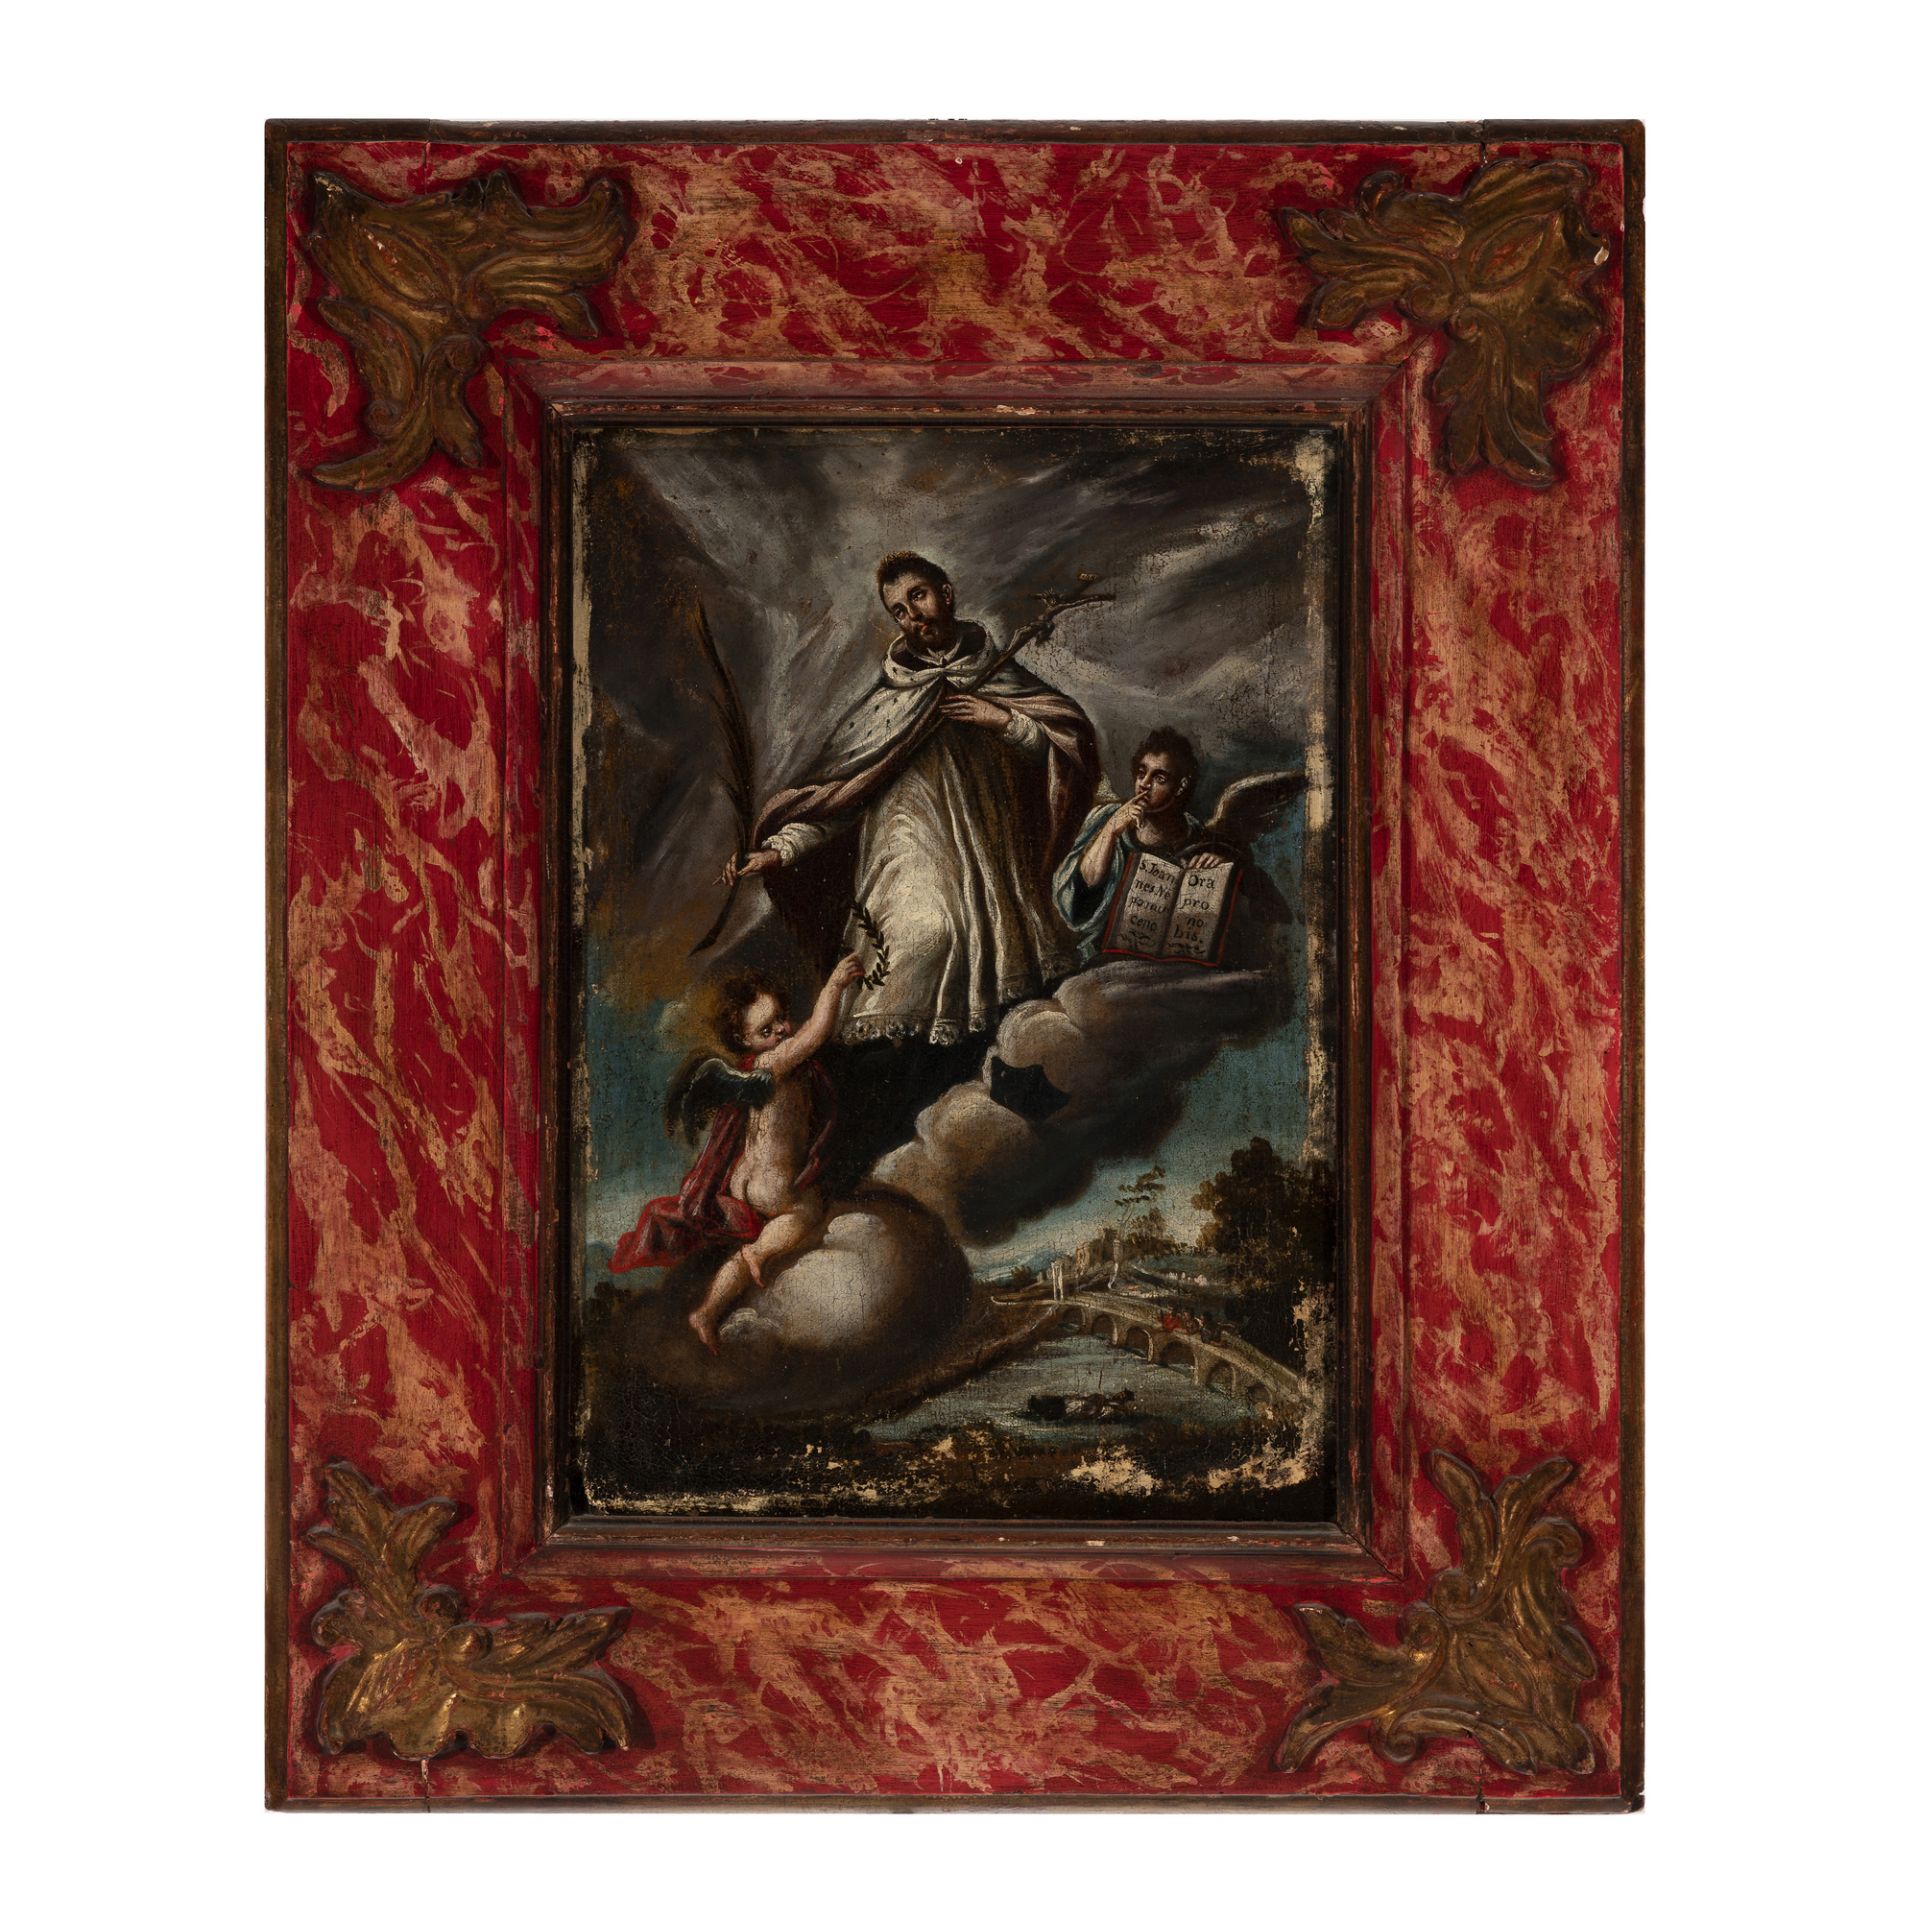 El Greco, oppure Il Greco, pseudonimo di Domínikos Theotokópoulos (Herakleio 1541 - Toledo 1614) cer